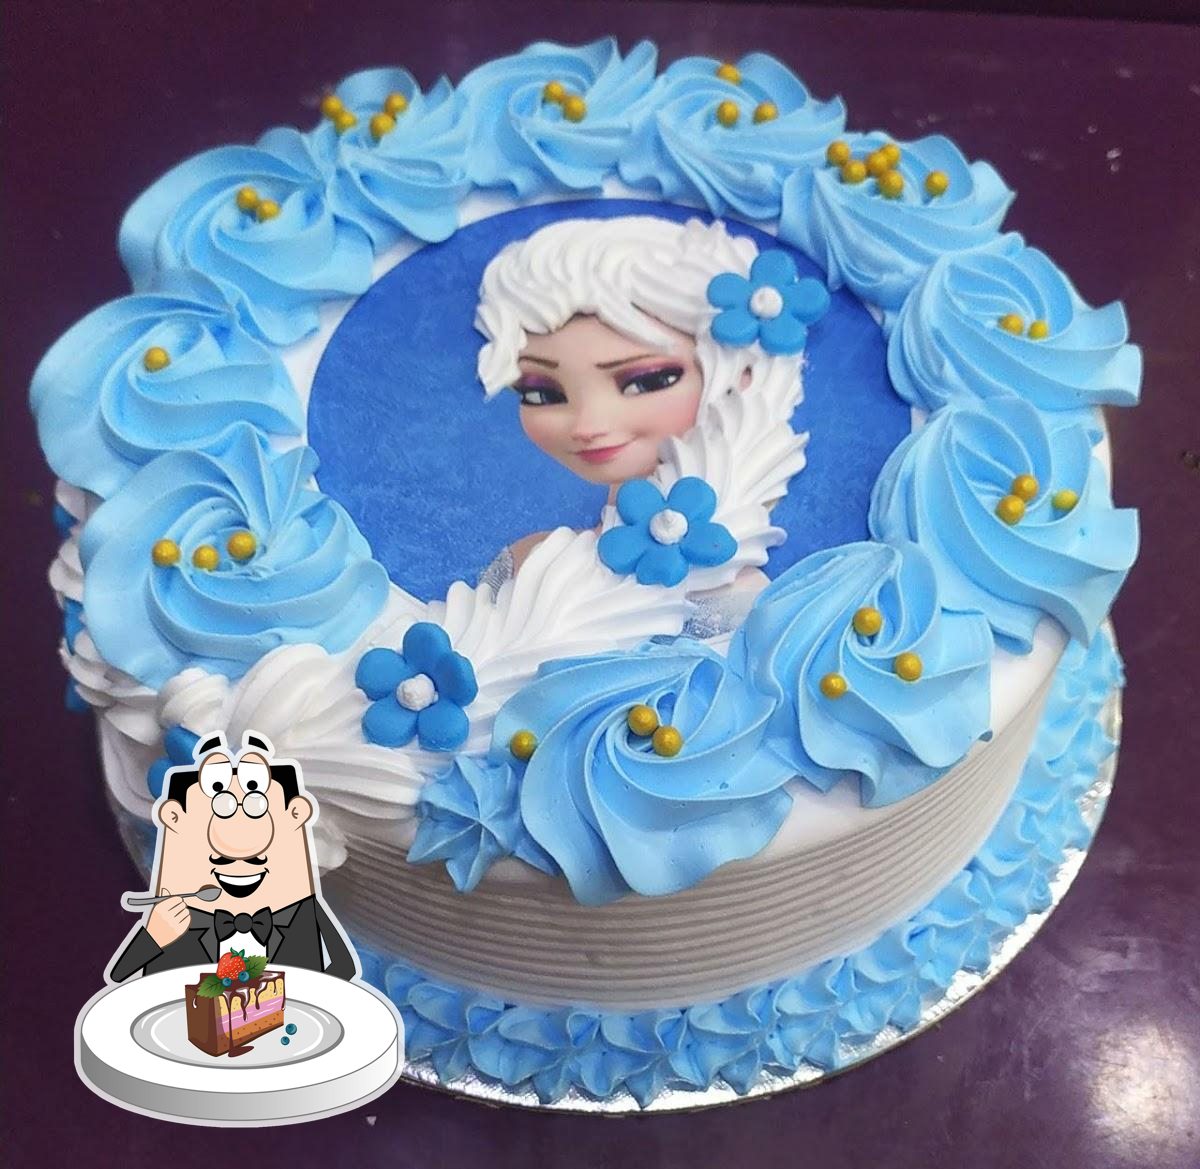 Shop for Fresh Delicious Birthday Cake online - Dwarka